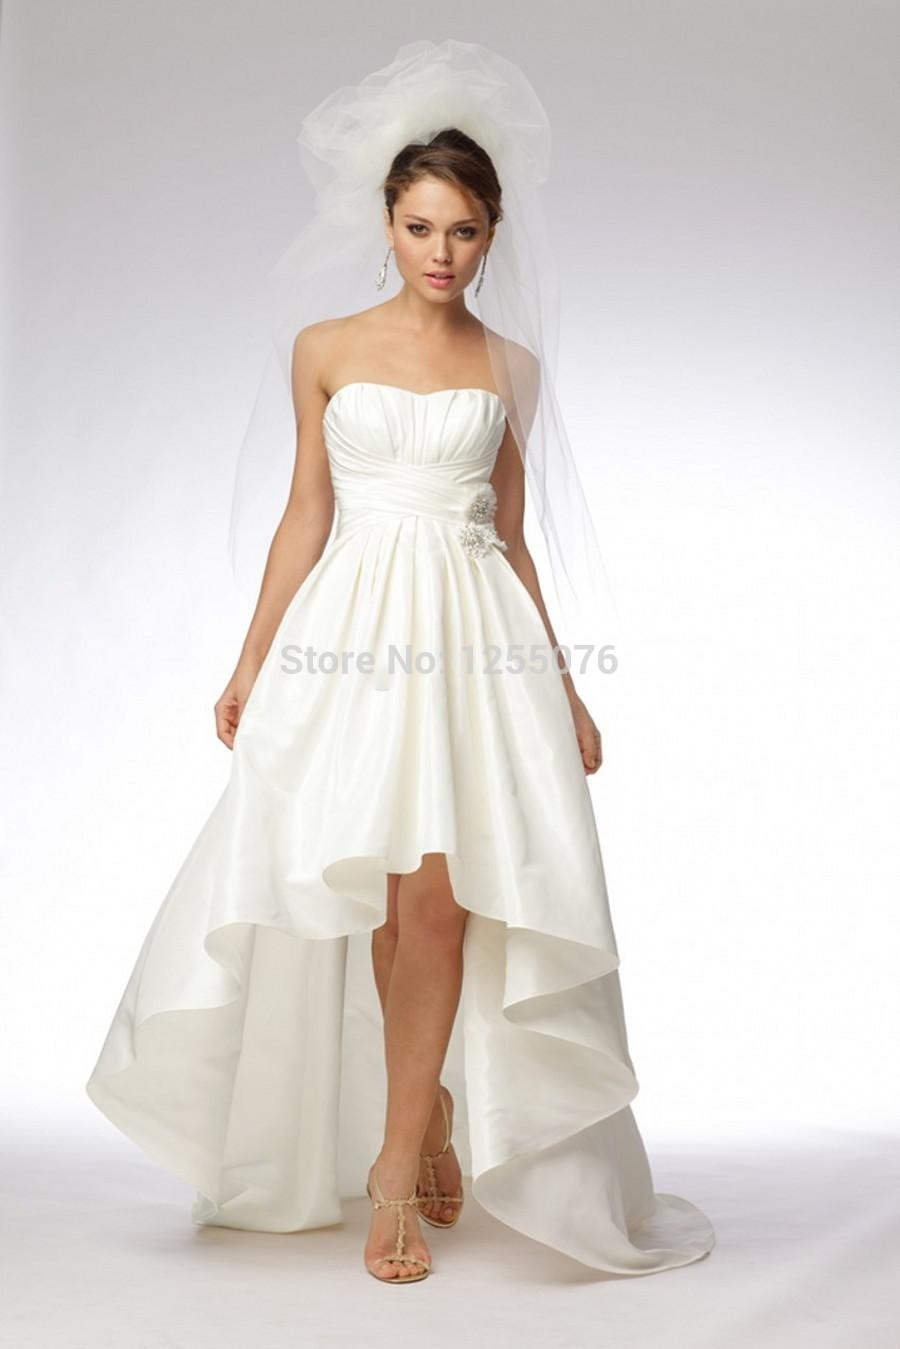 Hi-lo Wedding Dresses
 New 2014 Simple Wedding Dresses Strapless y Hi Lo Sheer